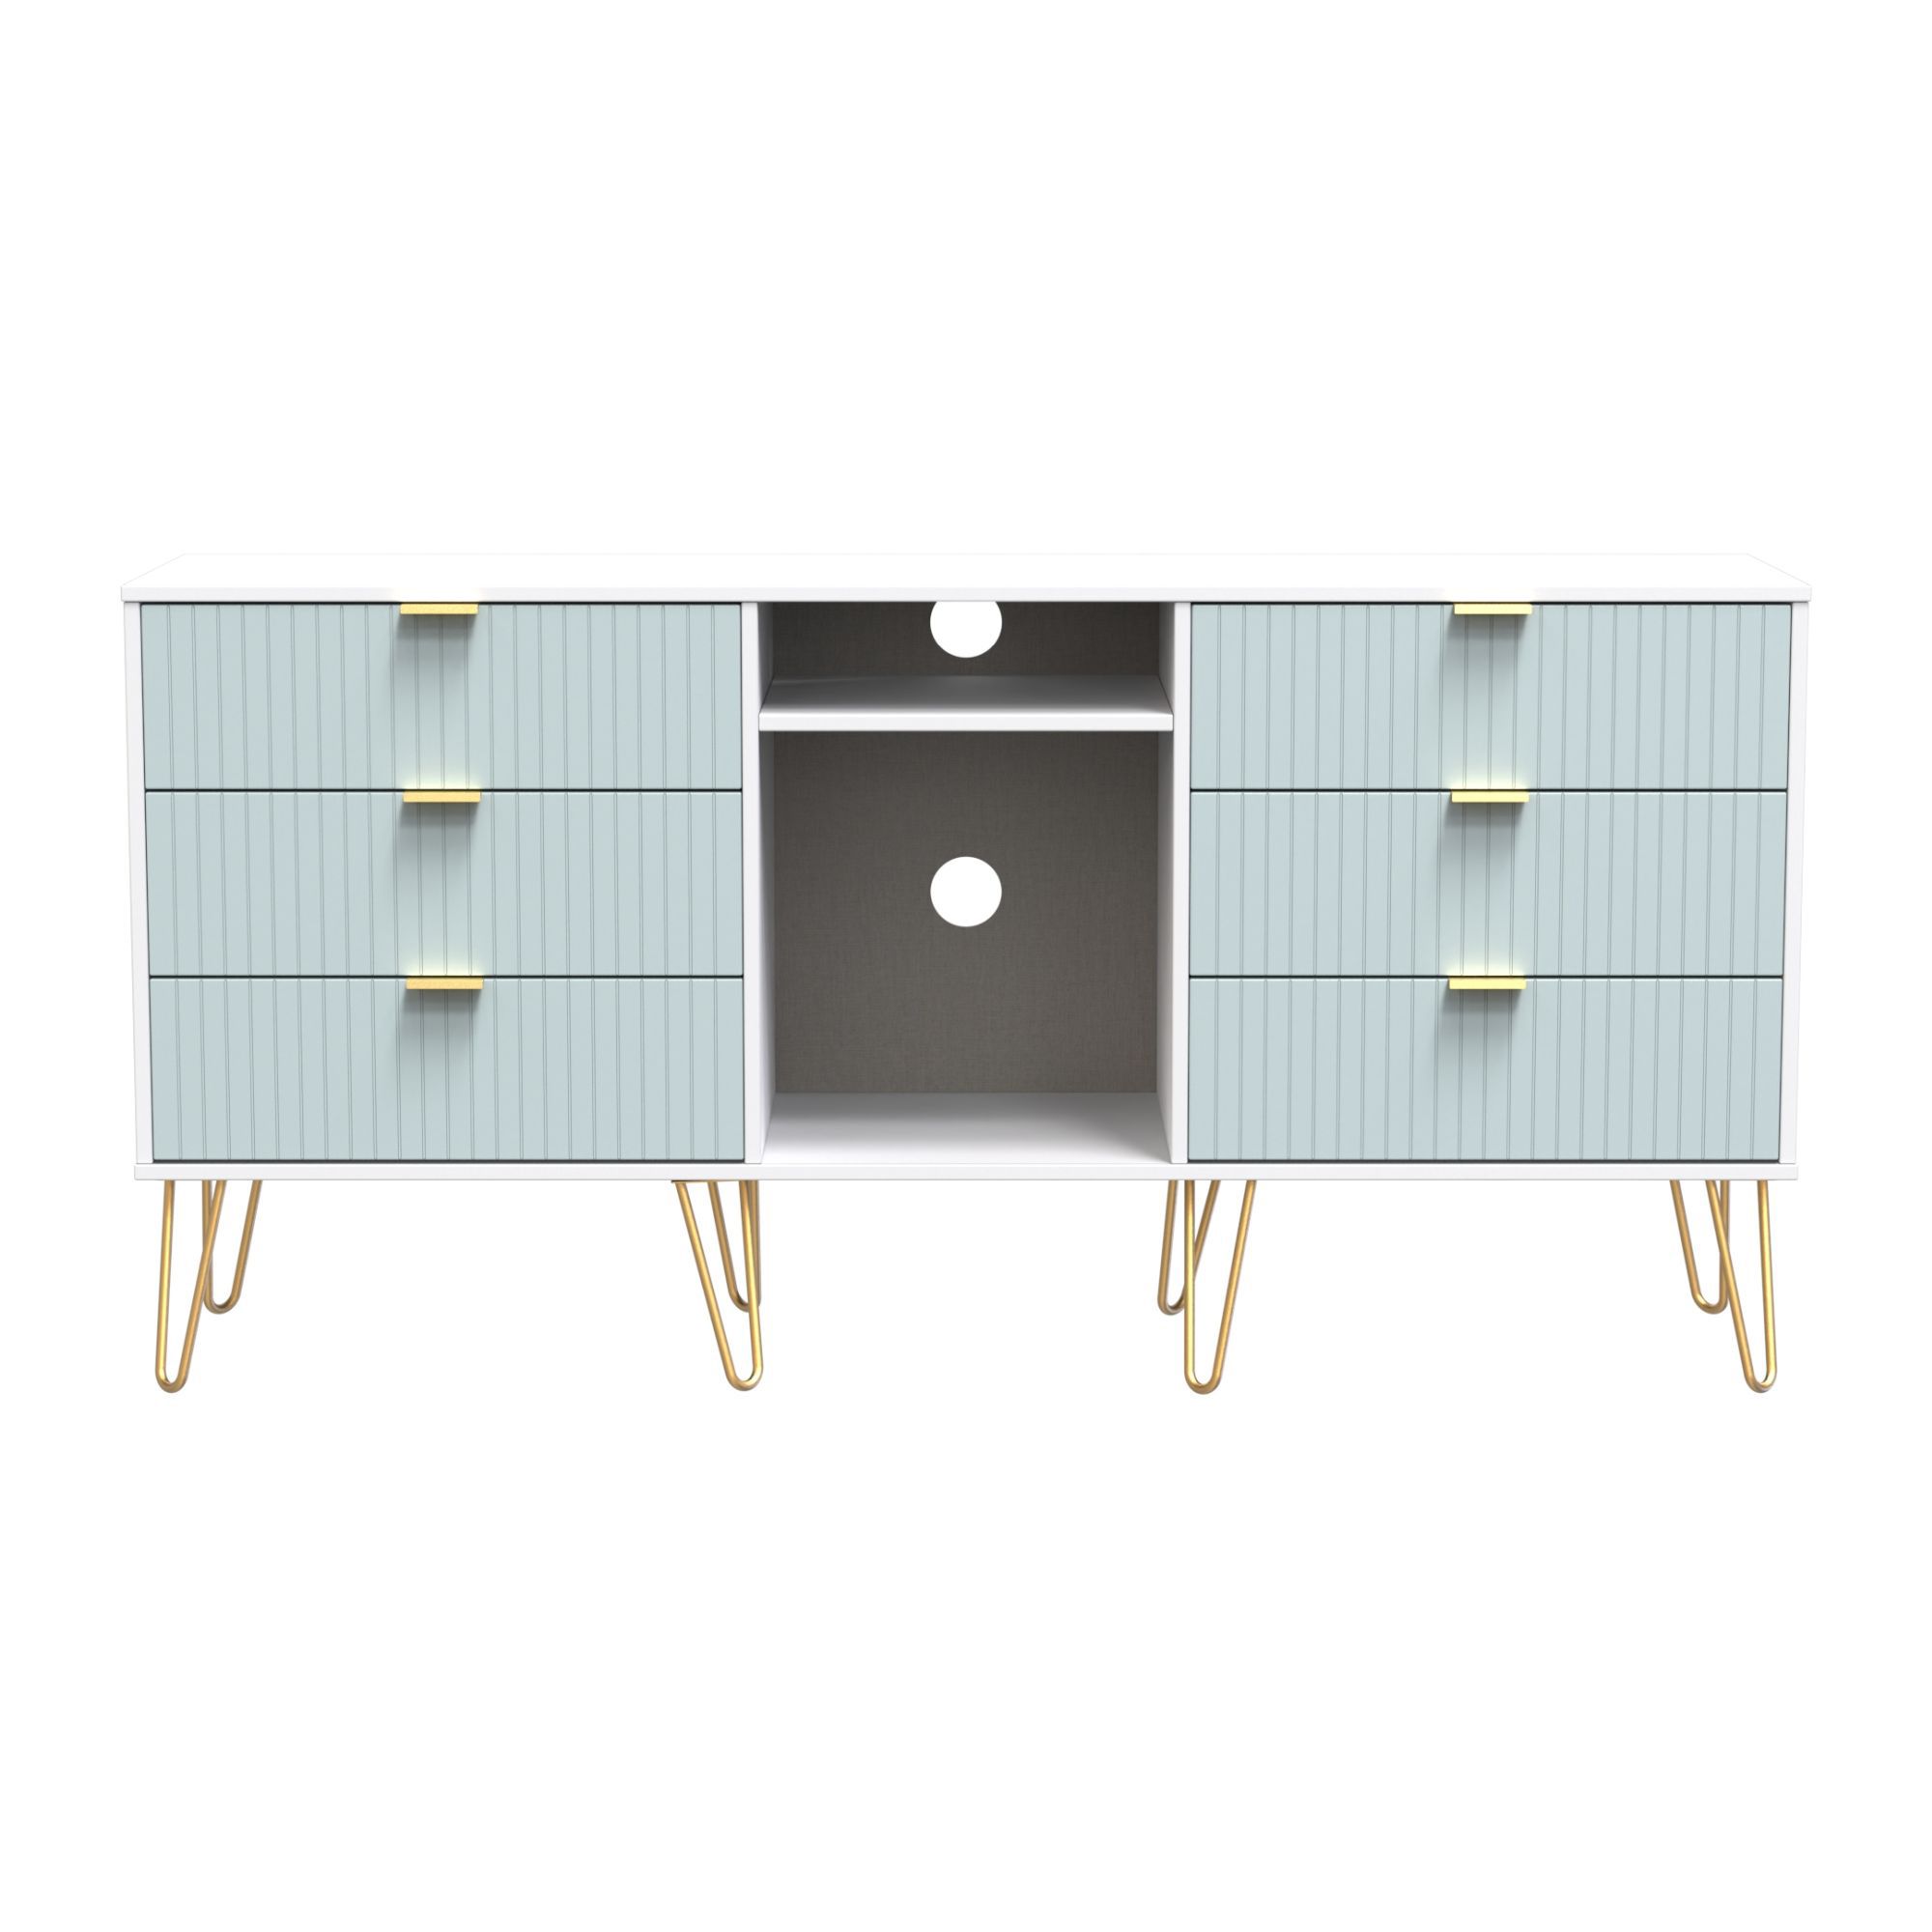 Linear Ready assembled Matt duck egg & white Media unit with 2 shelves & 6 drawers, (H)152cm x (W)74cm x (D)39.5cm